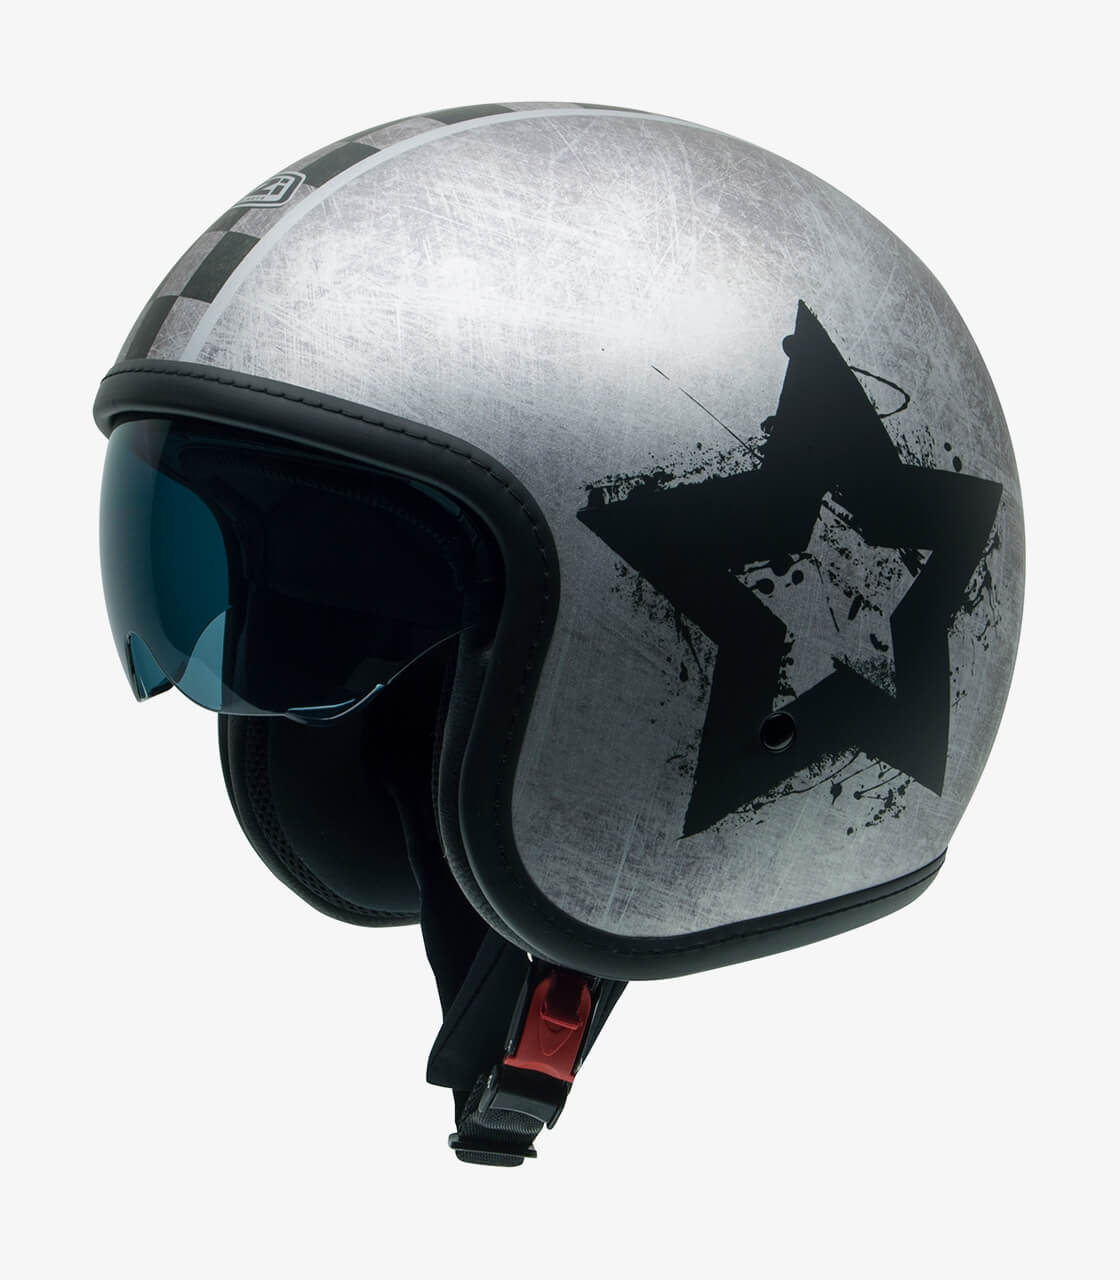 Rolling 4 - NZI Helmets